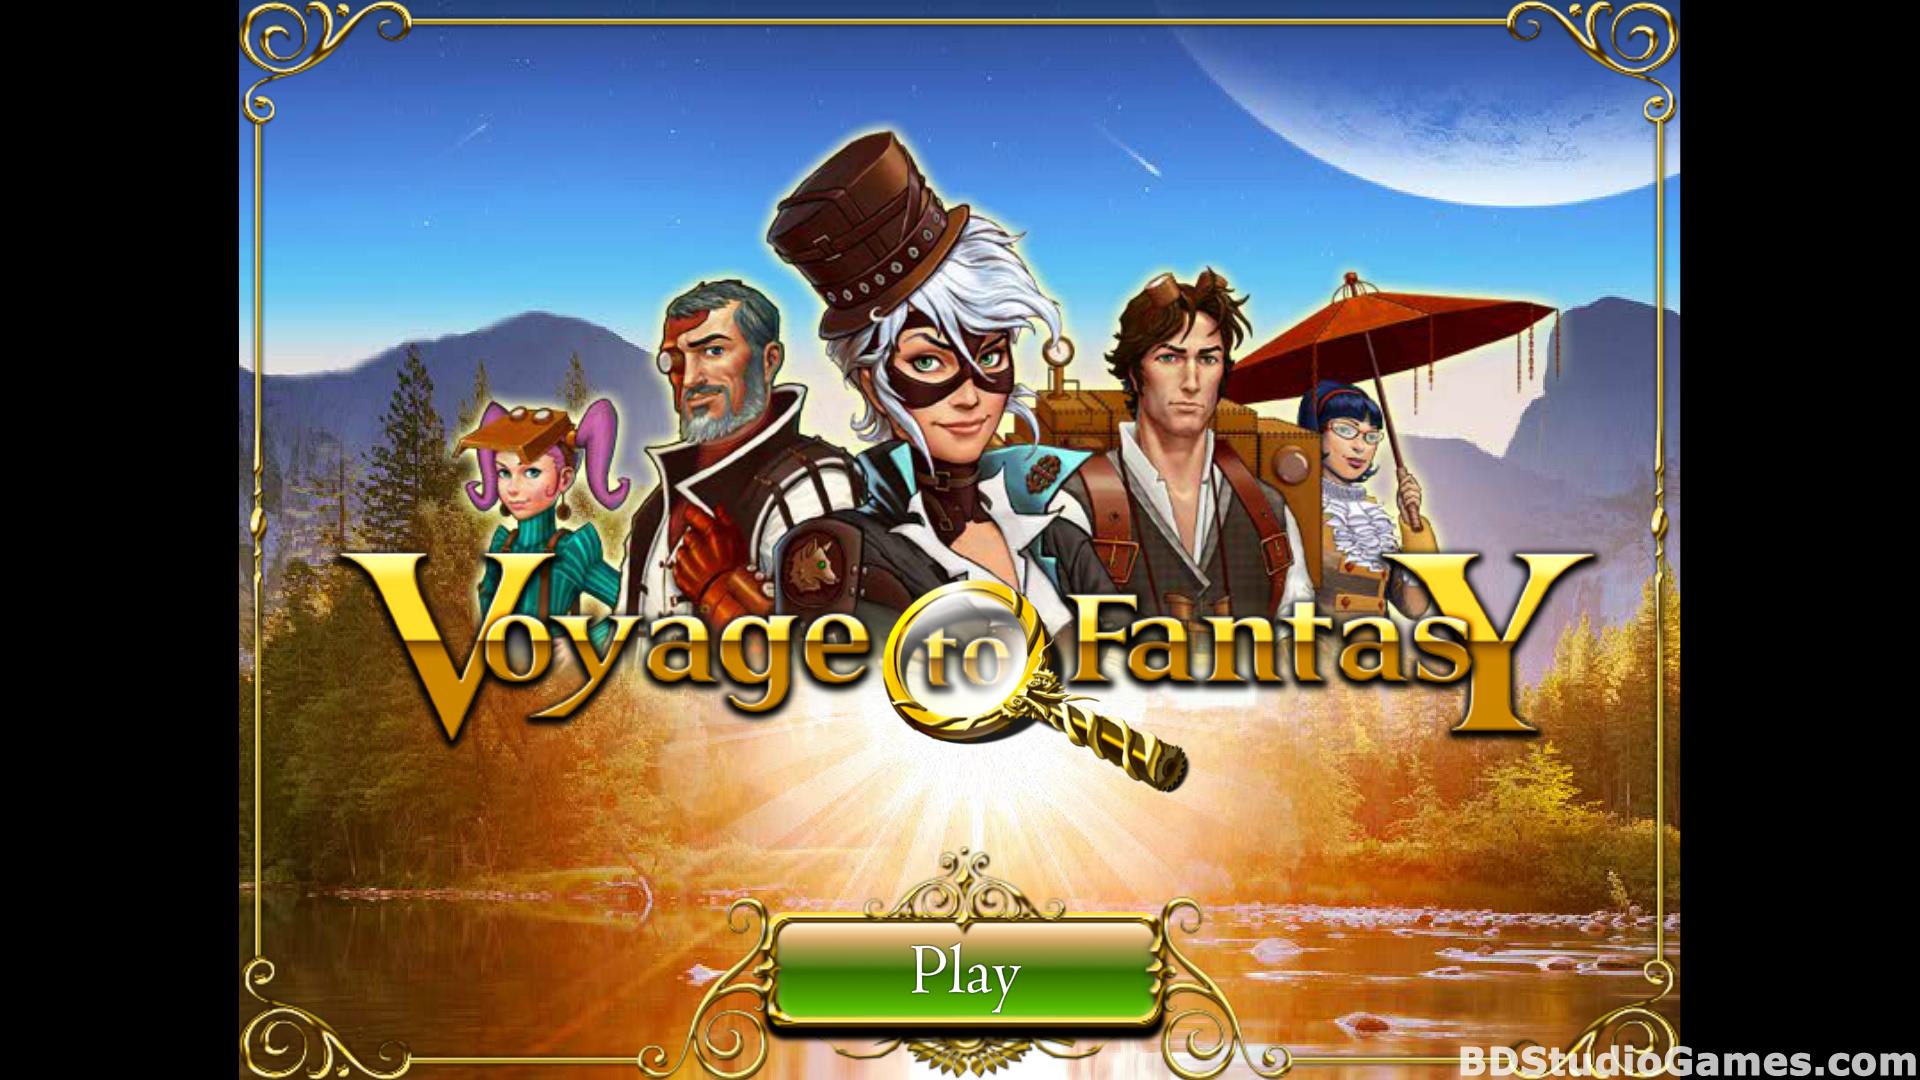 Voyage to Fantasy Free Download Screenshots 01